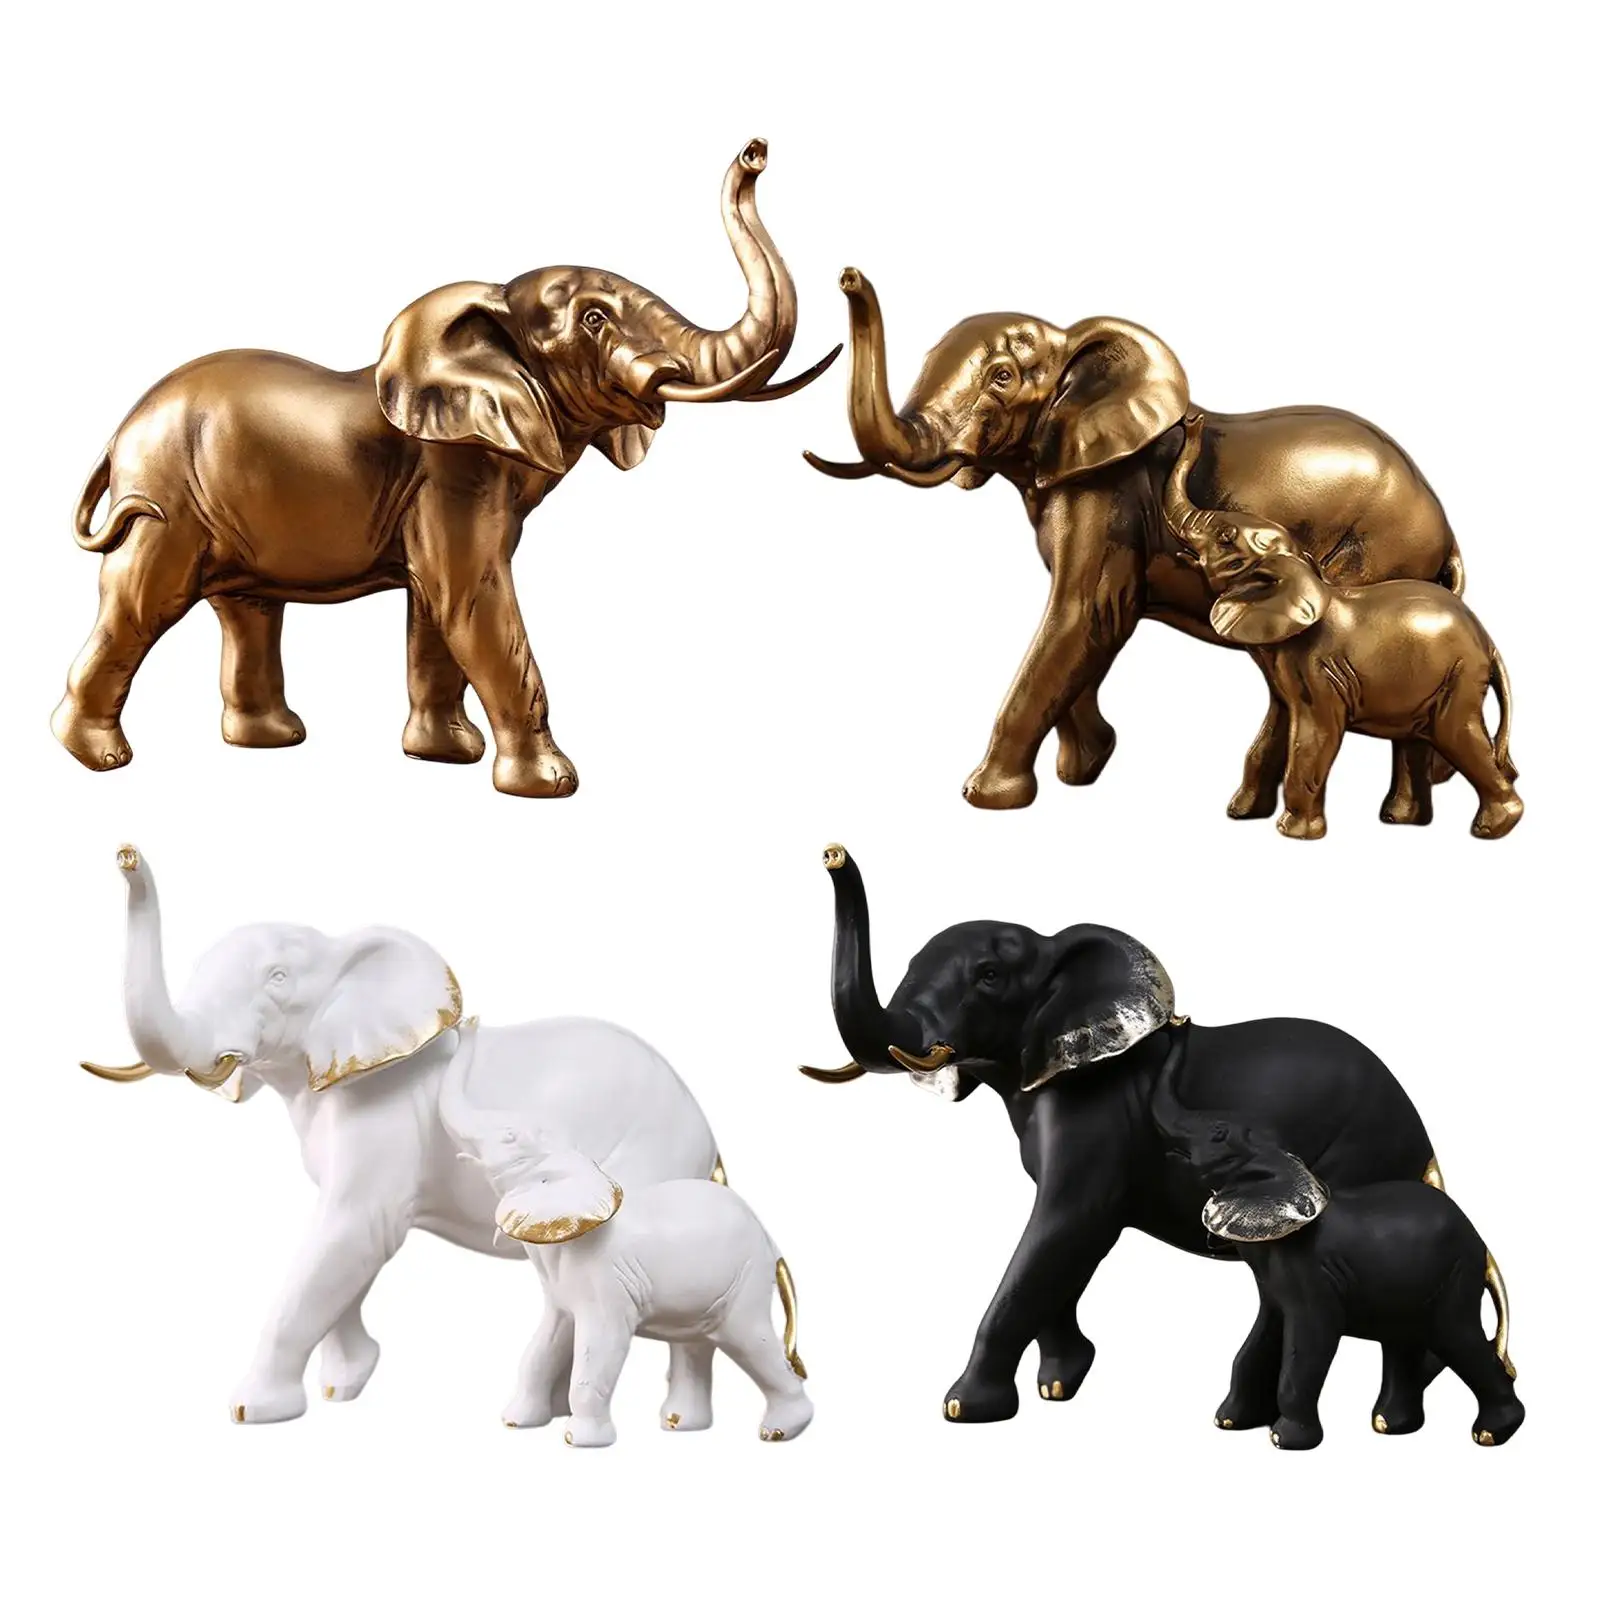 

Resin Figurines Sculpture Decorating Souvenirs Gifts Desktop Art Works Elephant Statues for Wedding Cabinet Bookshelf Christmas